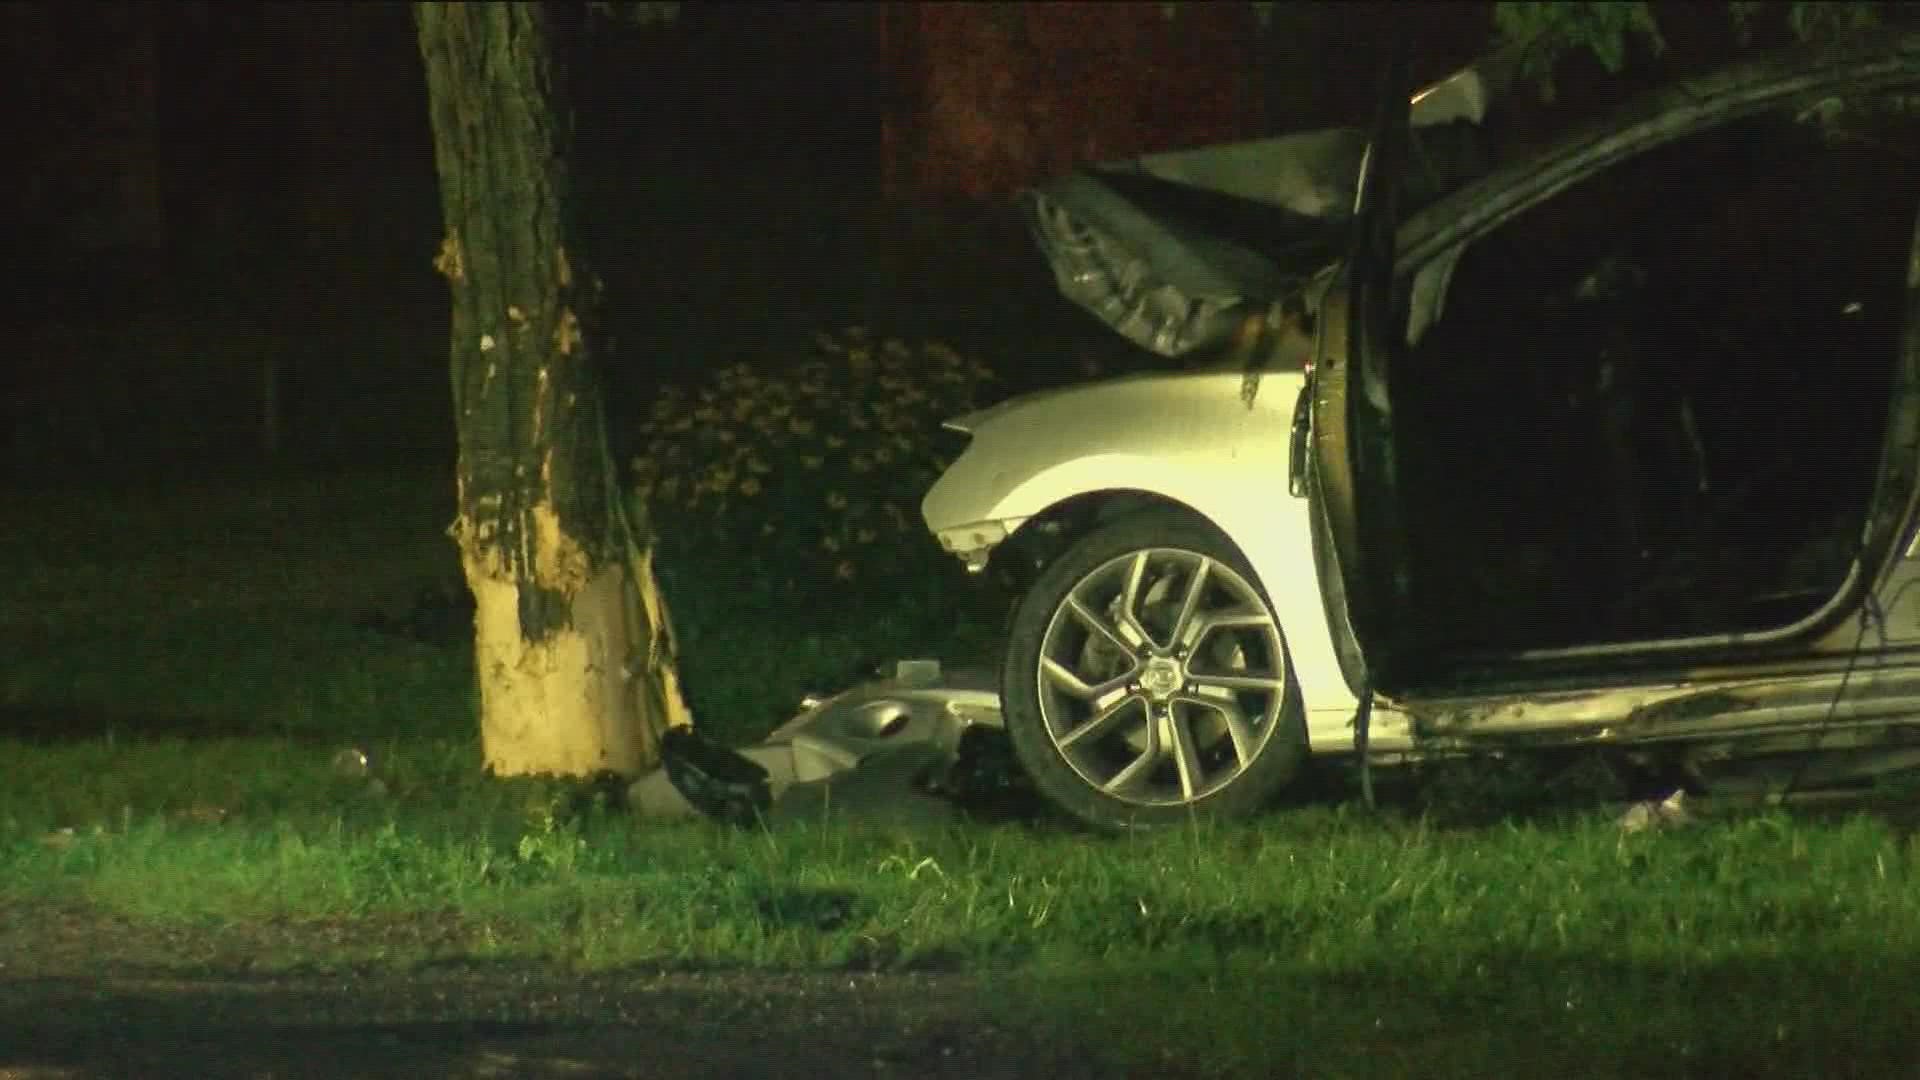 The crash happened Saturday on Heatherdowns Blvd. around 10:45 p.m.